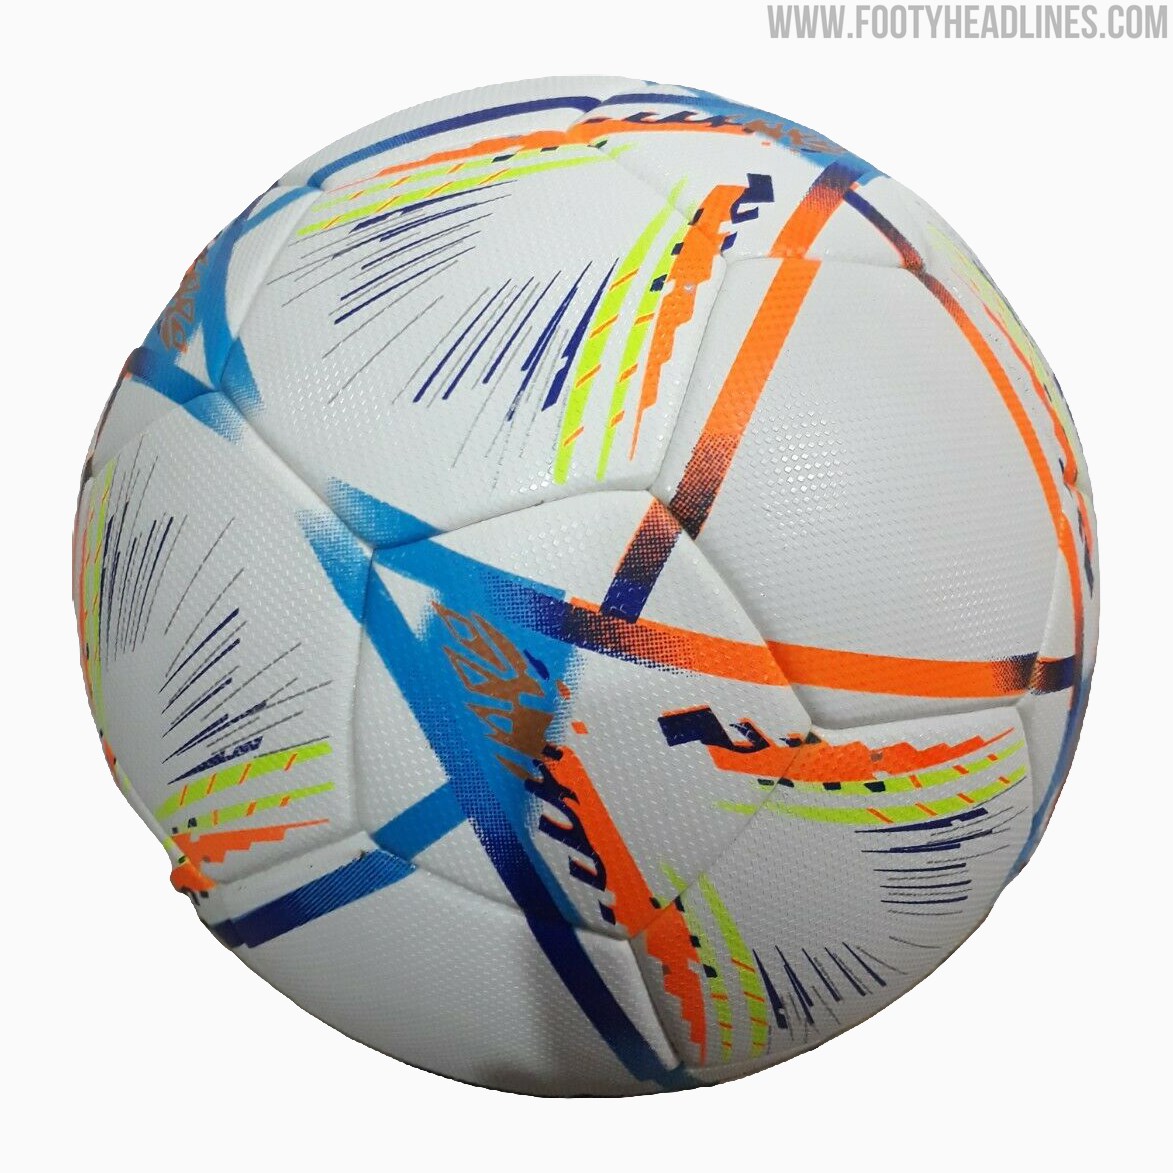 Adidas 2022 World Cup Ball Leaked? - Footy Headlines